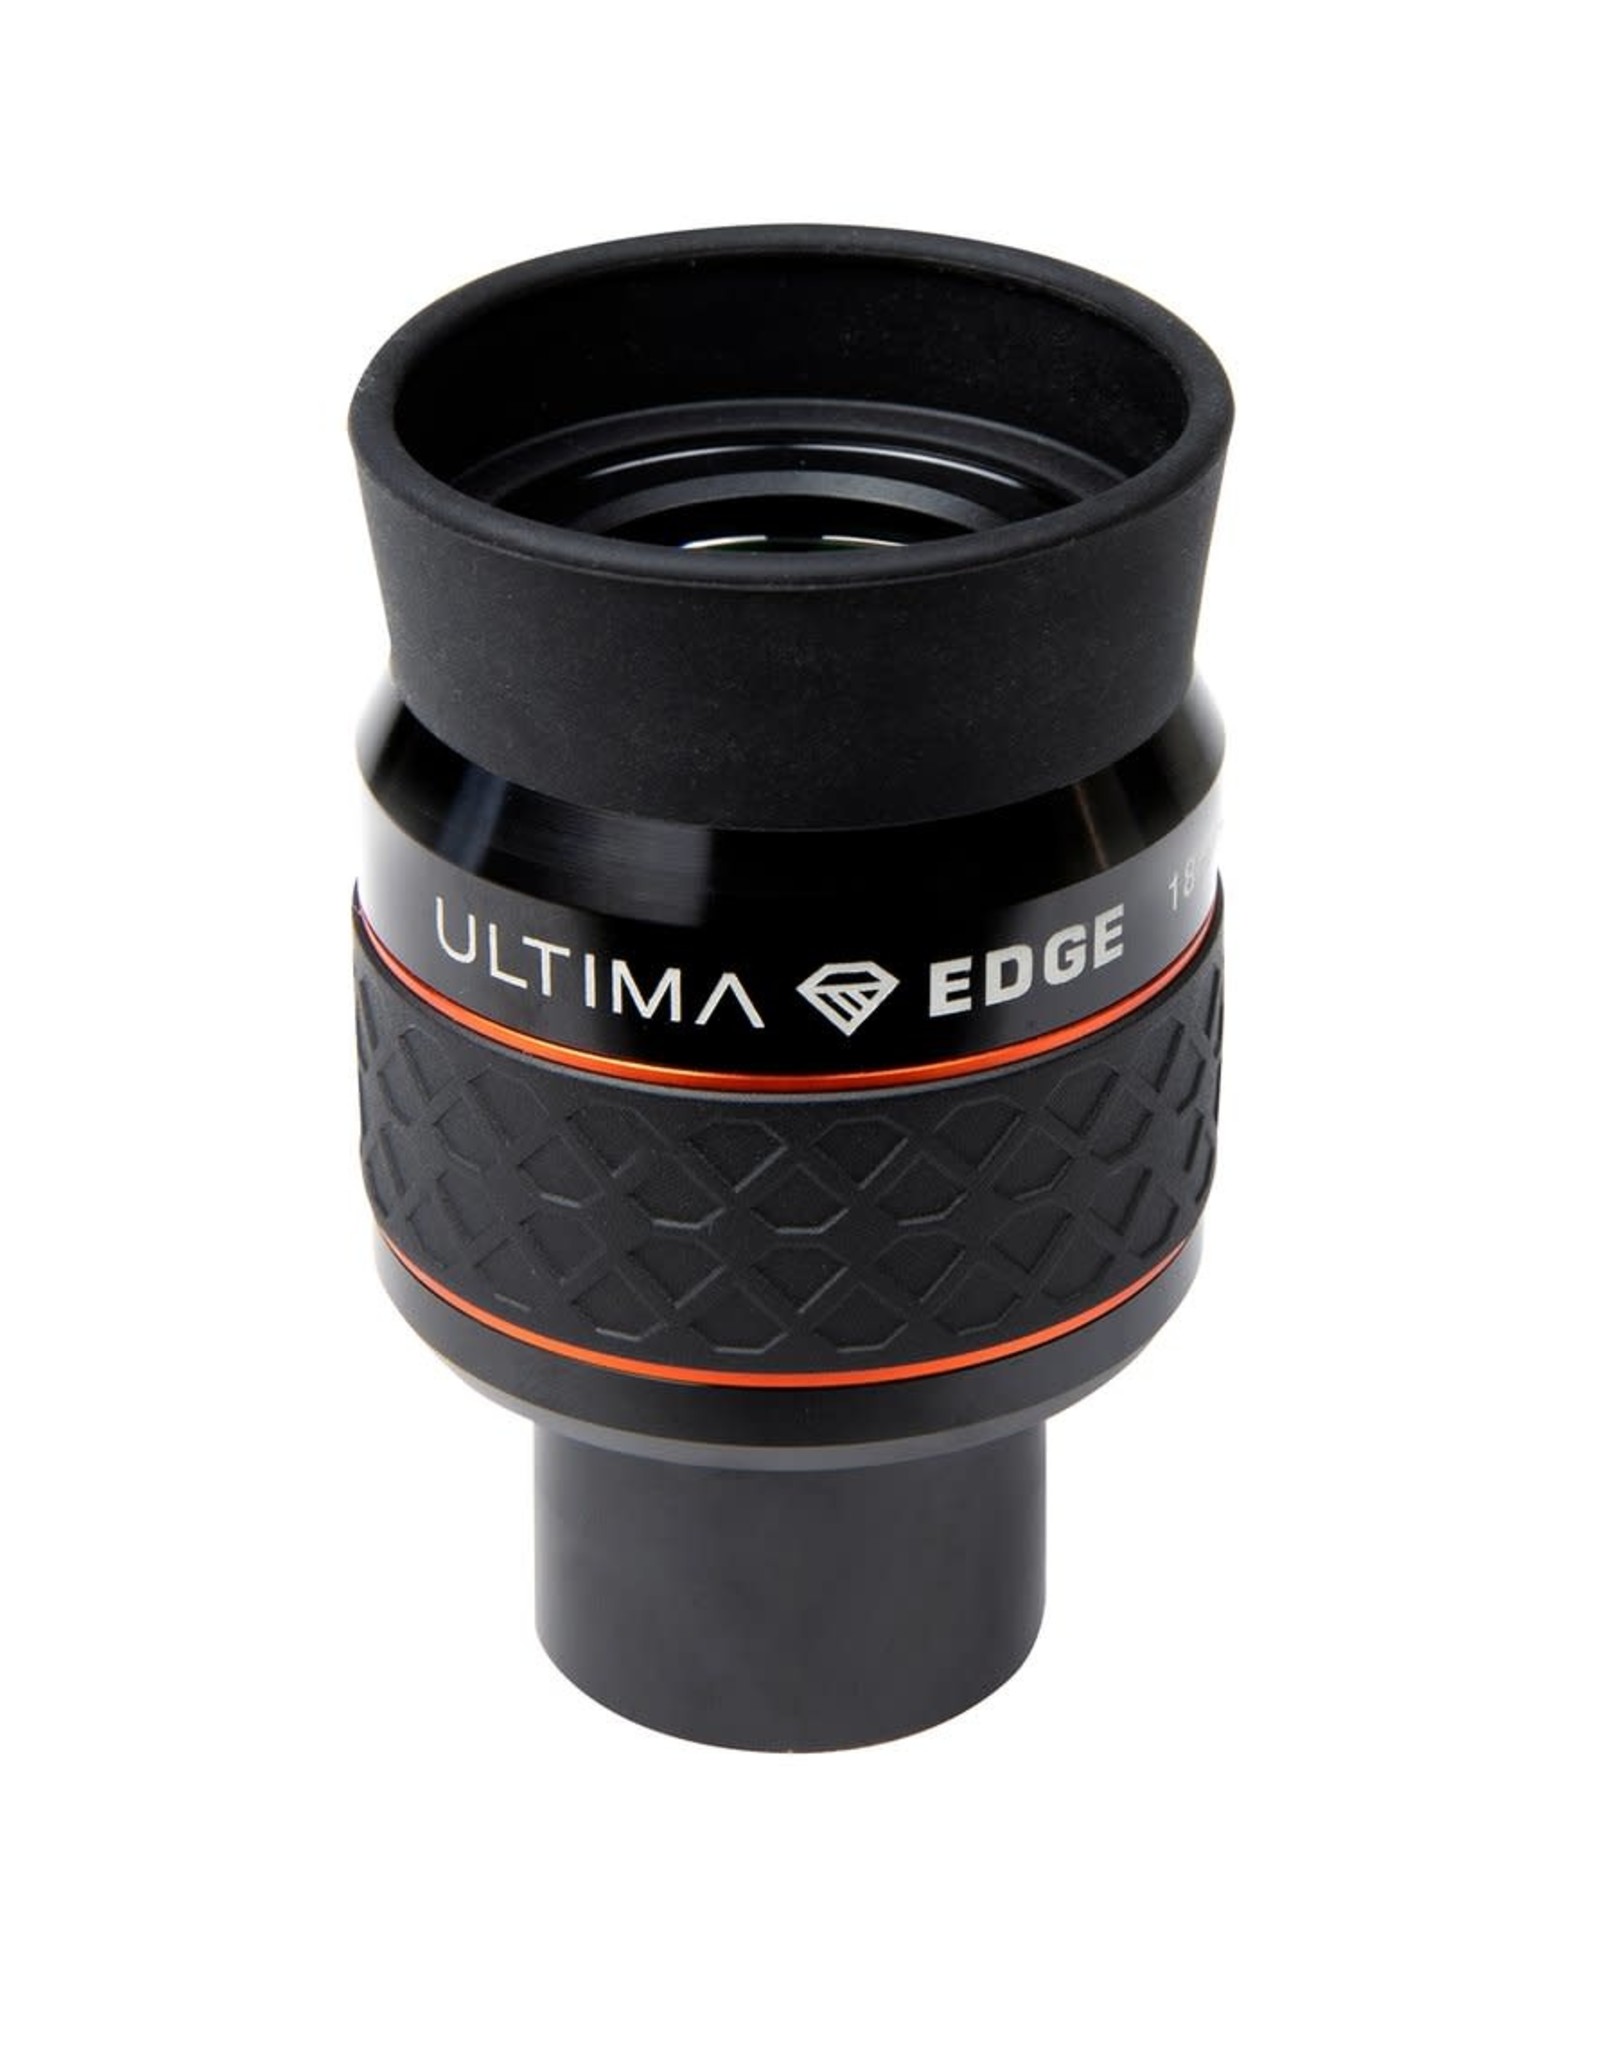 Celestron Celestron Ultima Edge - 18mm Flat Field Eyepiece - 1.25" - 93452